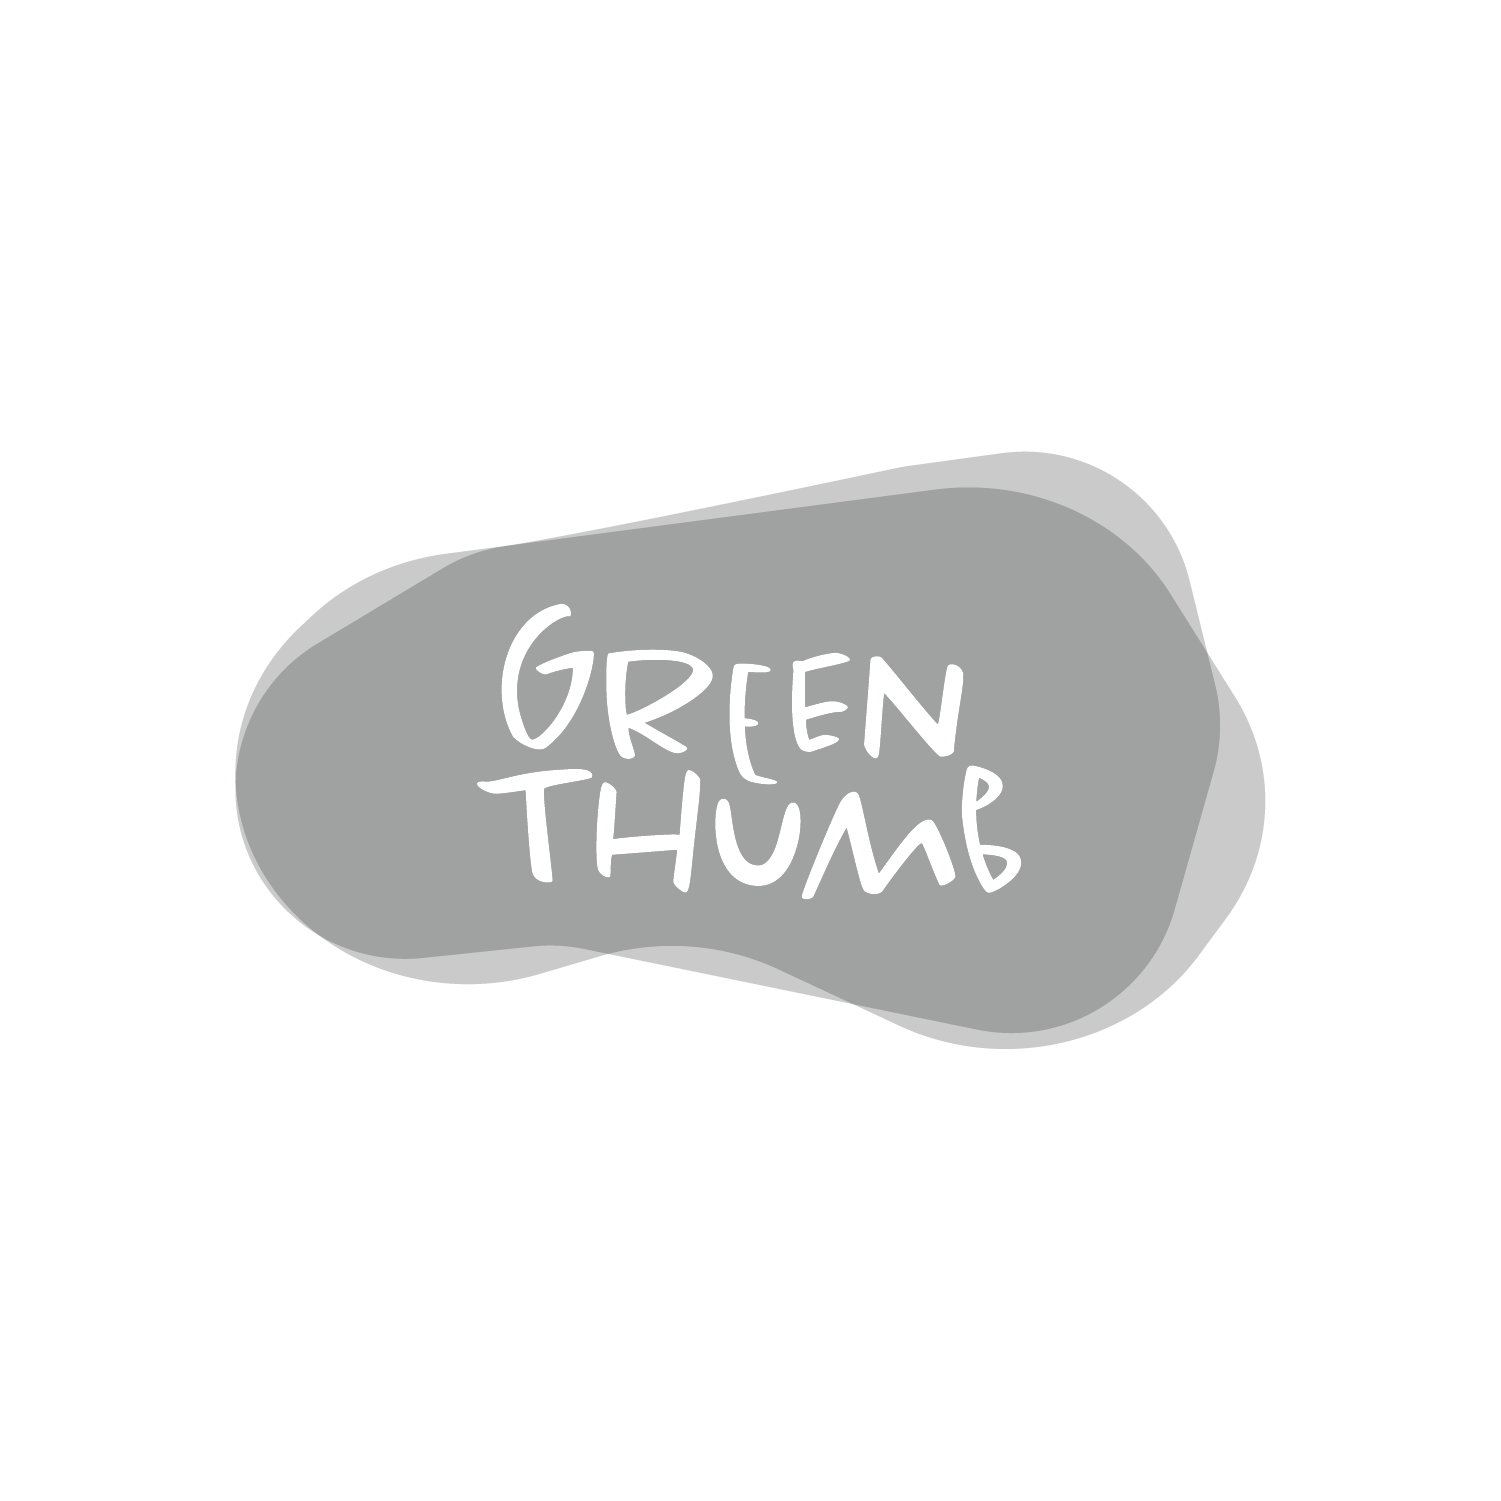 GreenThumb-bw